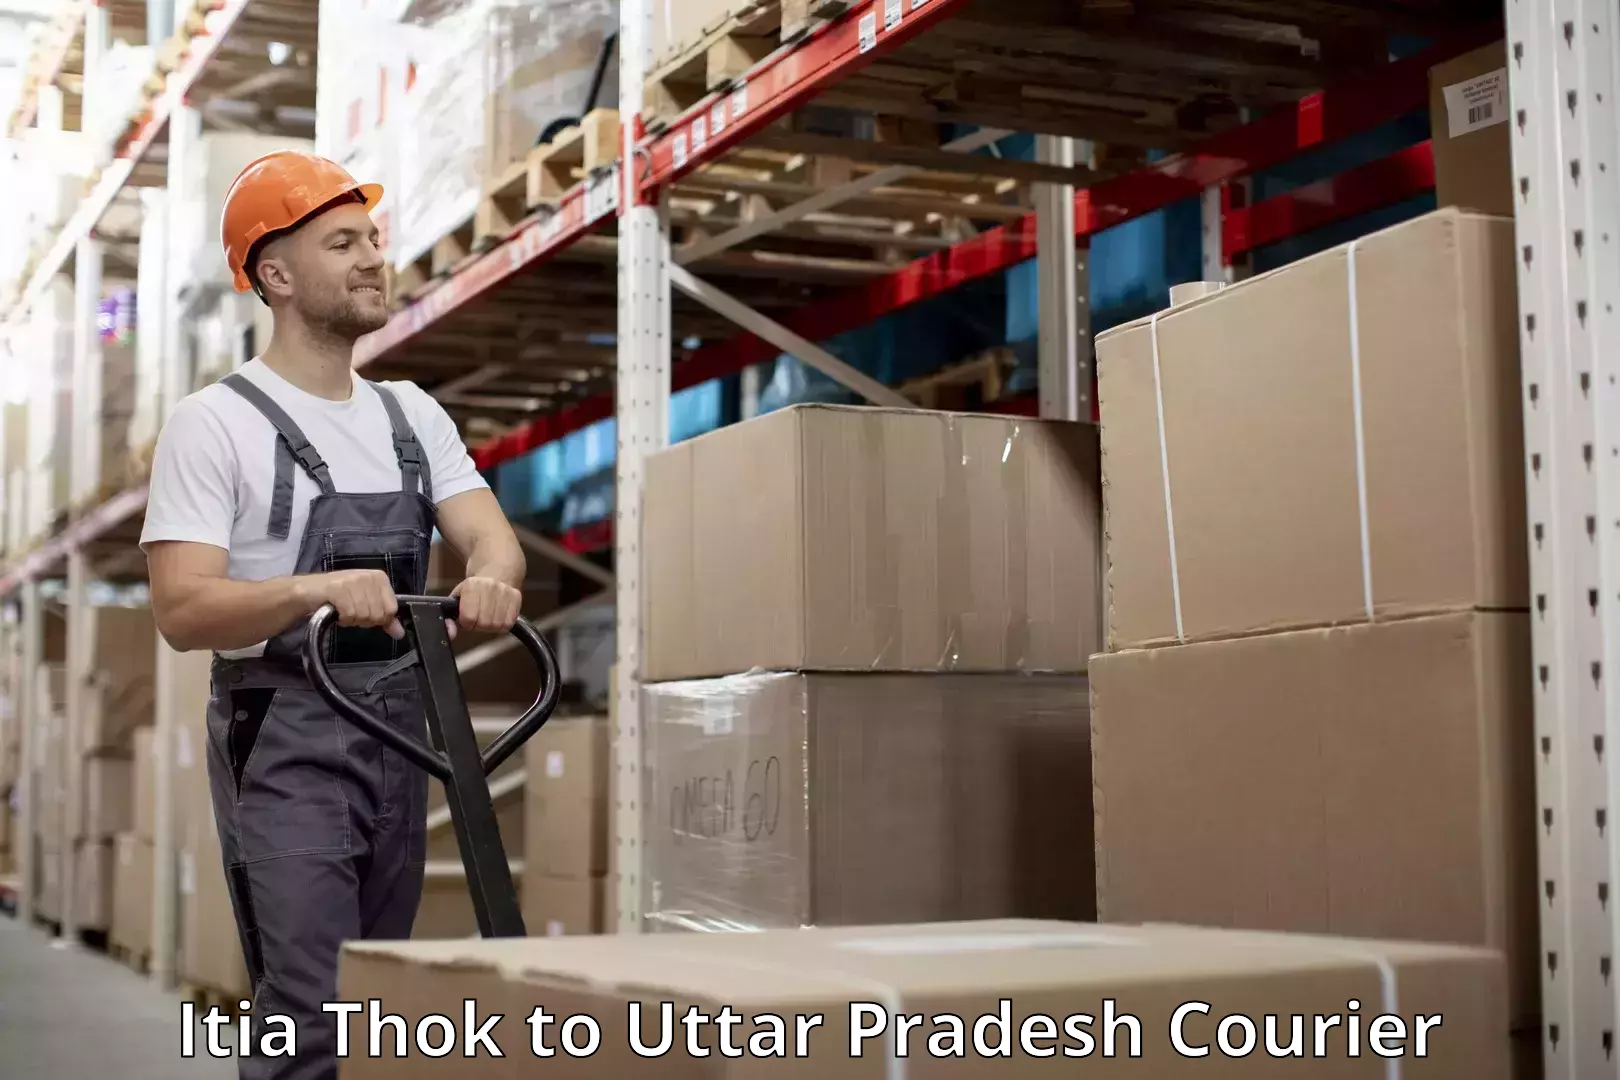 Luggage delivery optimization Itia Thok to Uttar Pradesh